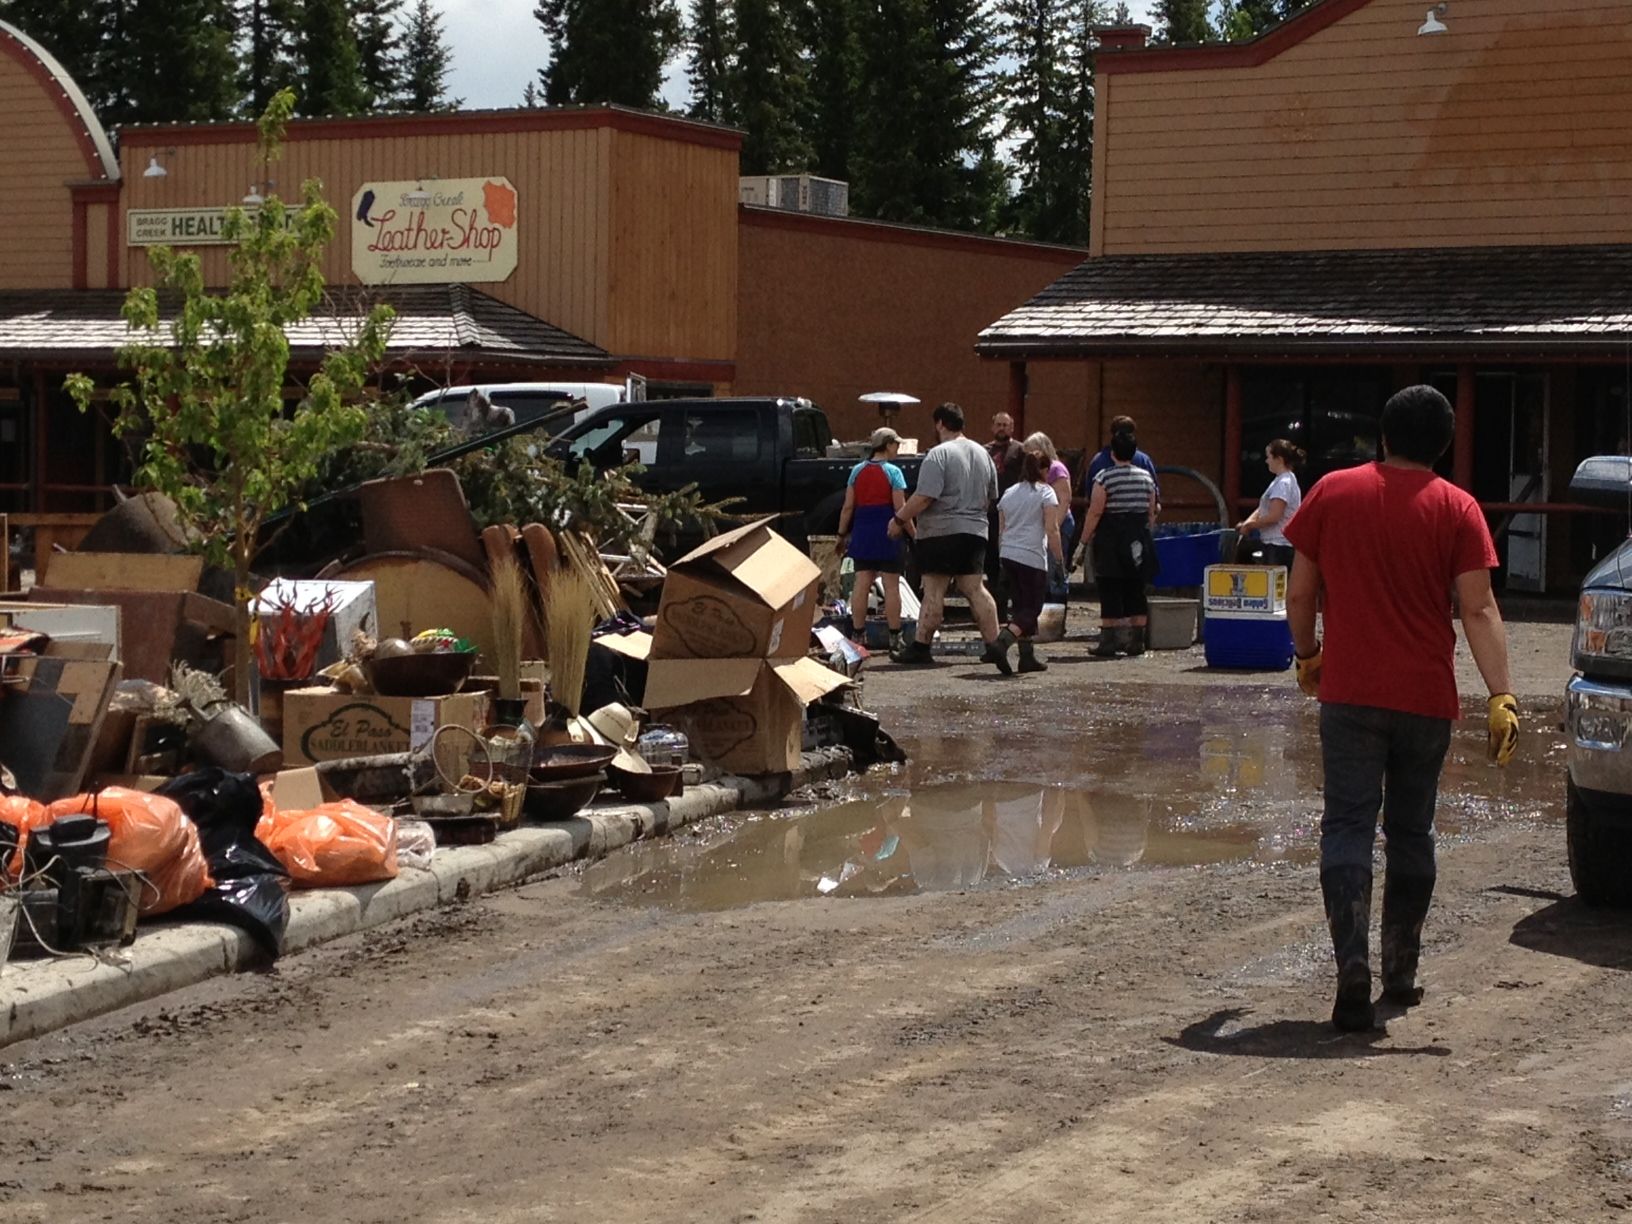 Flood debris is piled up as cleanup efforts are underway in Bragg Creek. (Michele Jarvie/Calgary Herald)